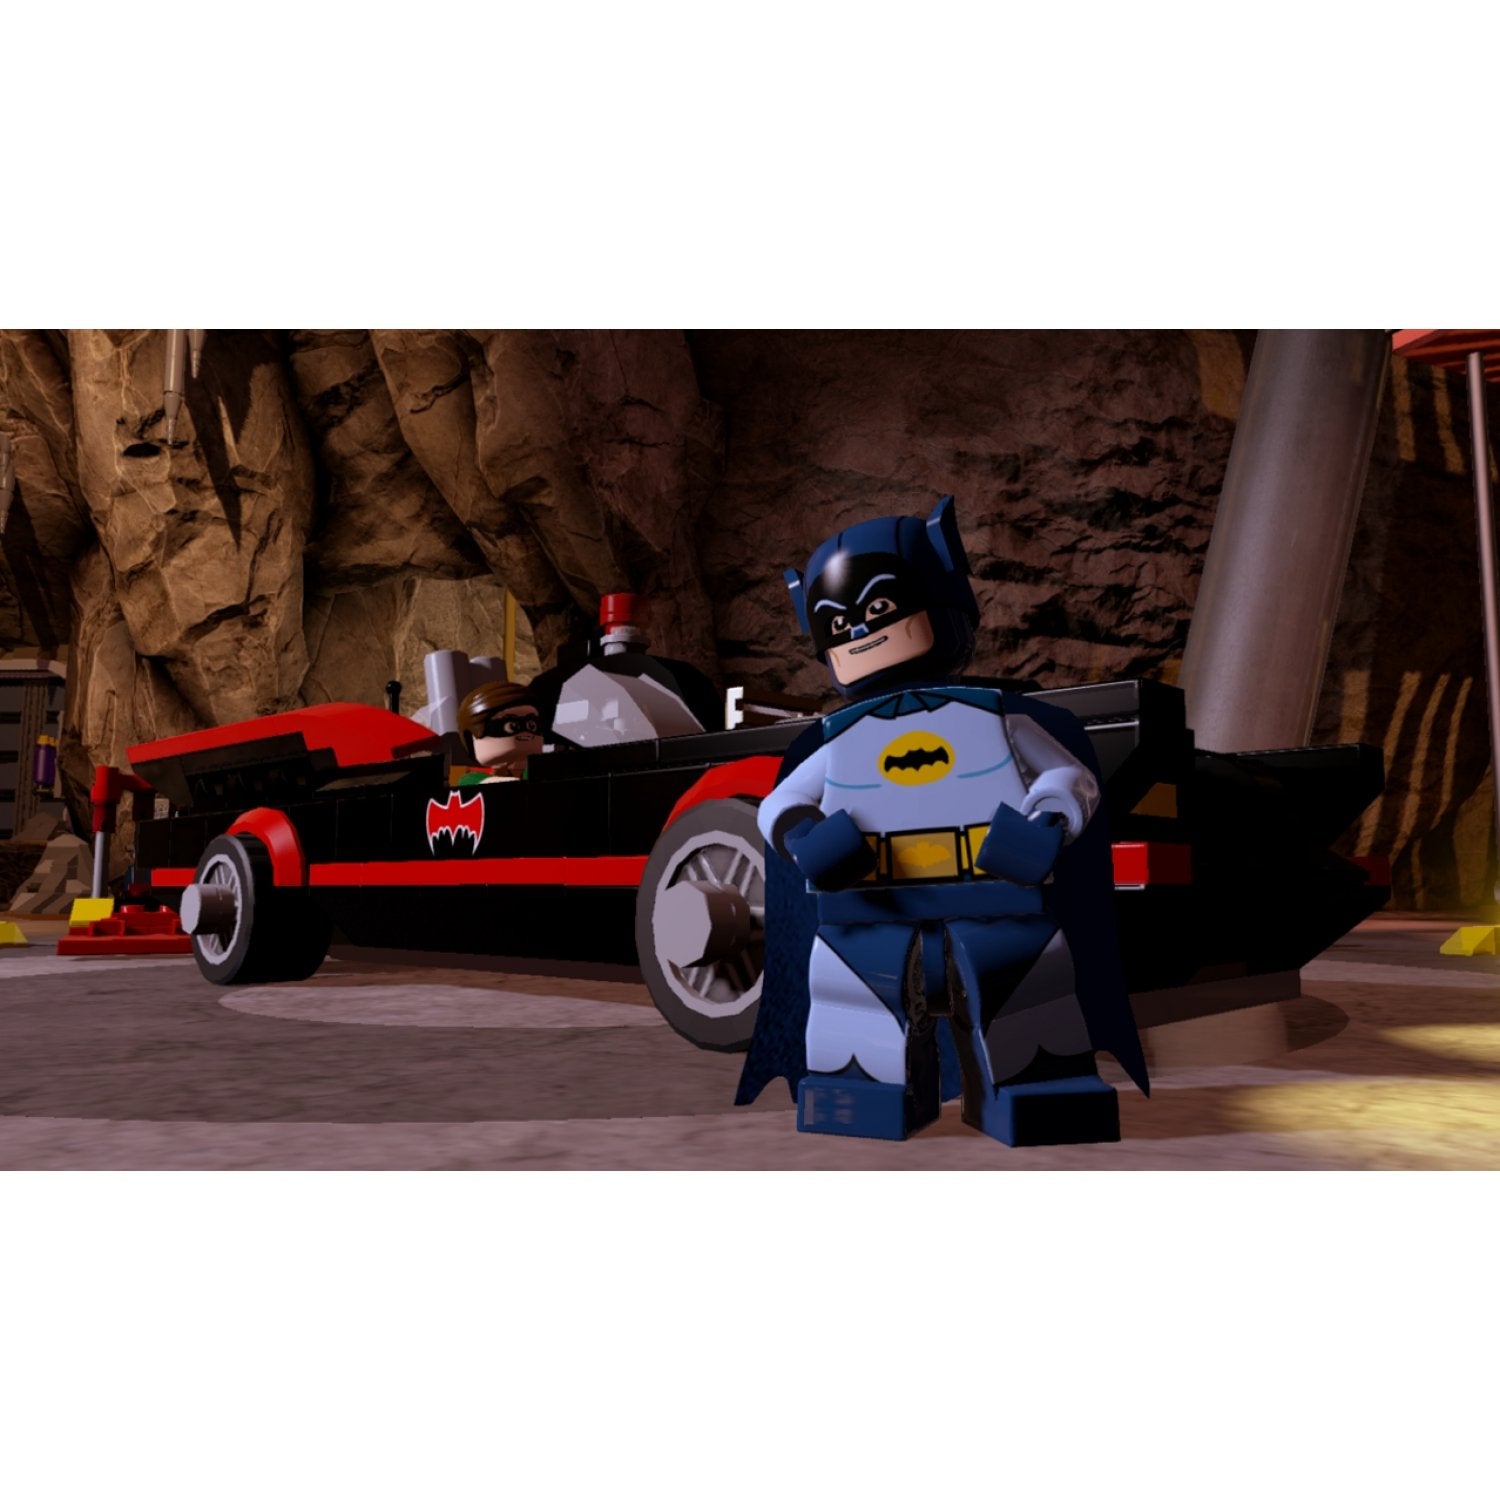 PS4 LEGO Batman 3: Beyond Gotham (EN ver.) (PlayStation Hits)